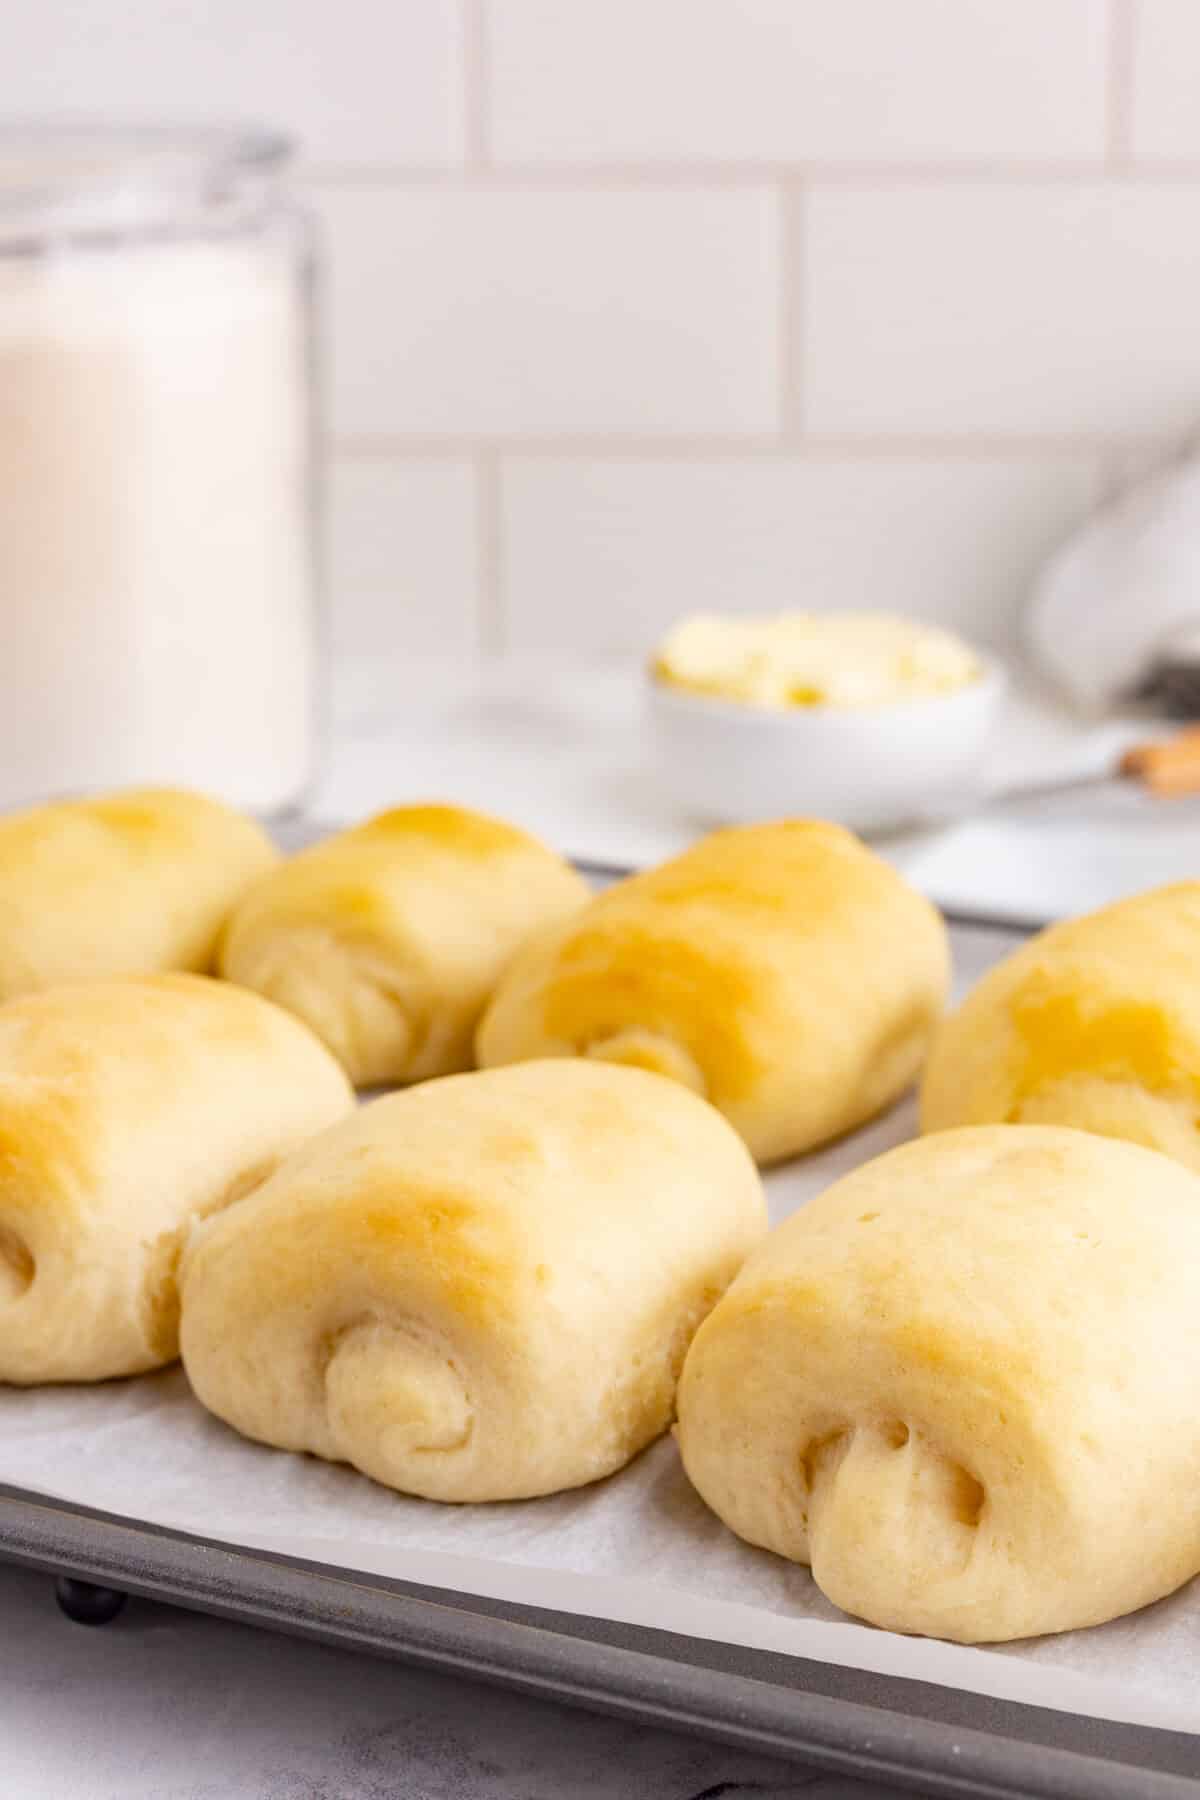 freshly baked rolls on a baking sheet